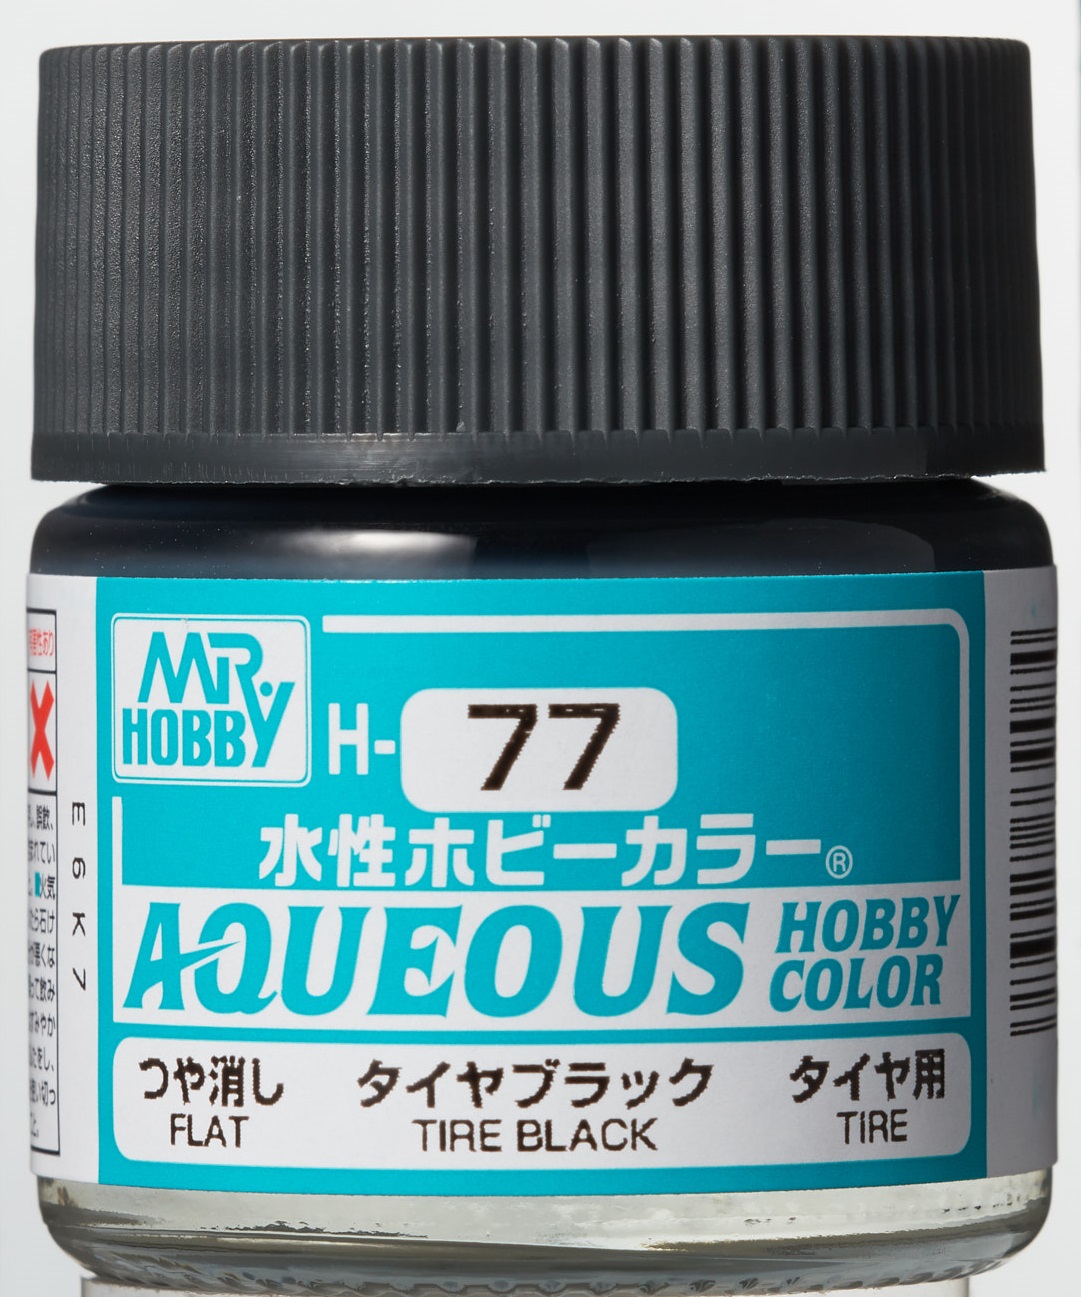 Mr. Aqueous Hobby Color - Tire Black  - H77 - Reifen Schwarz